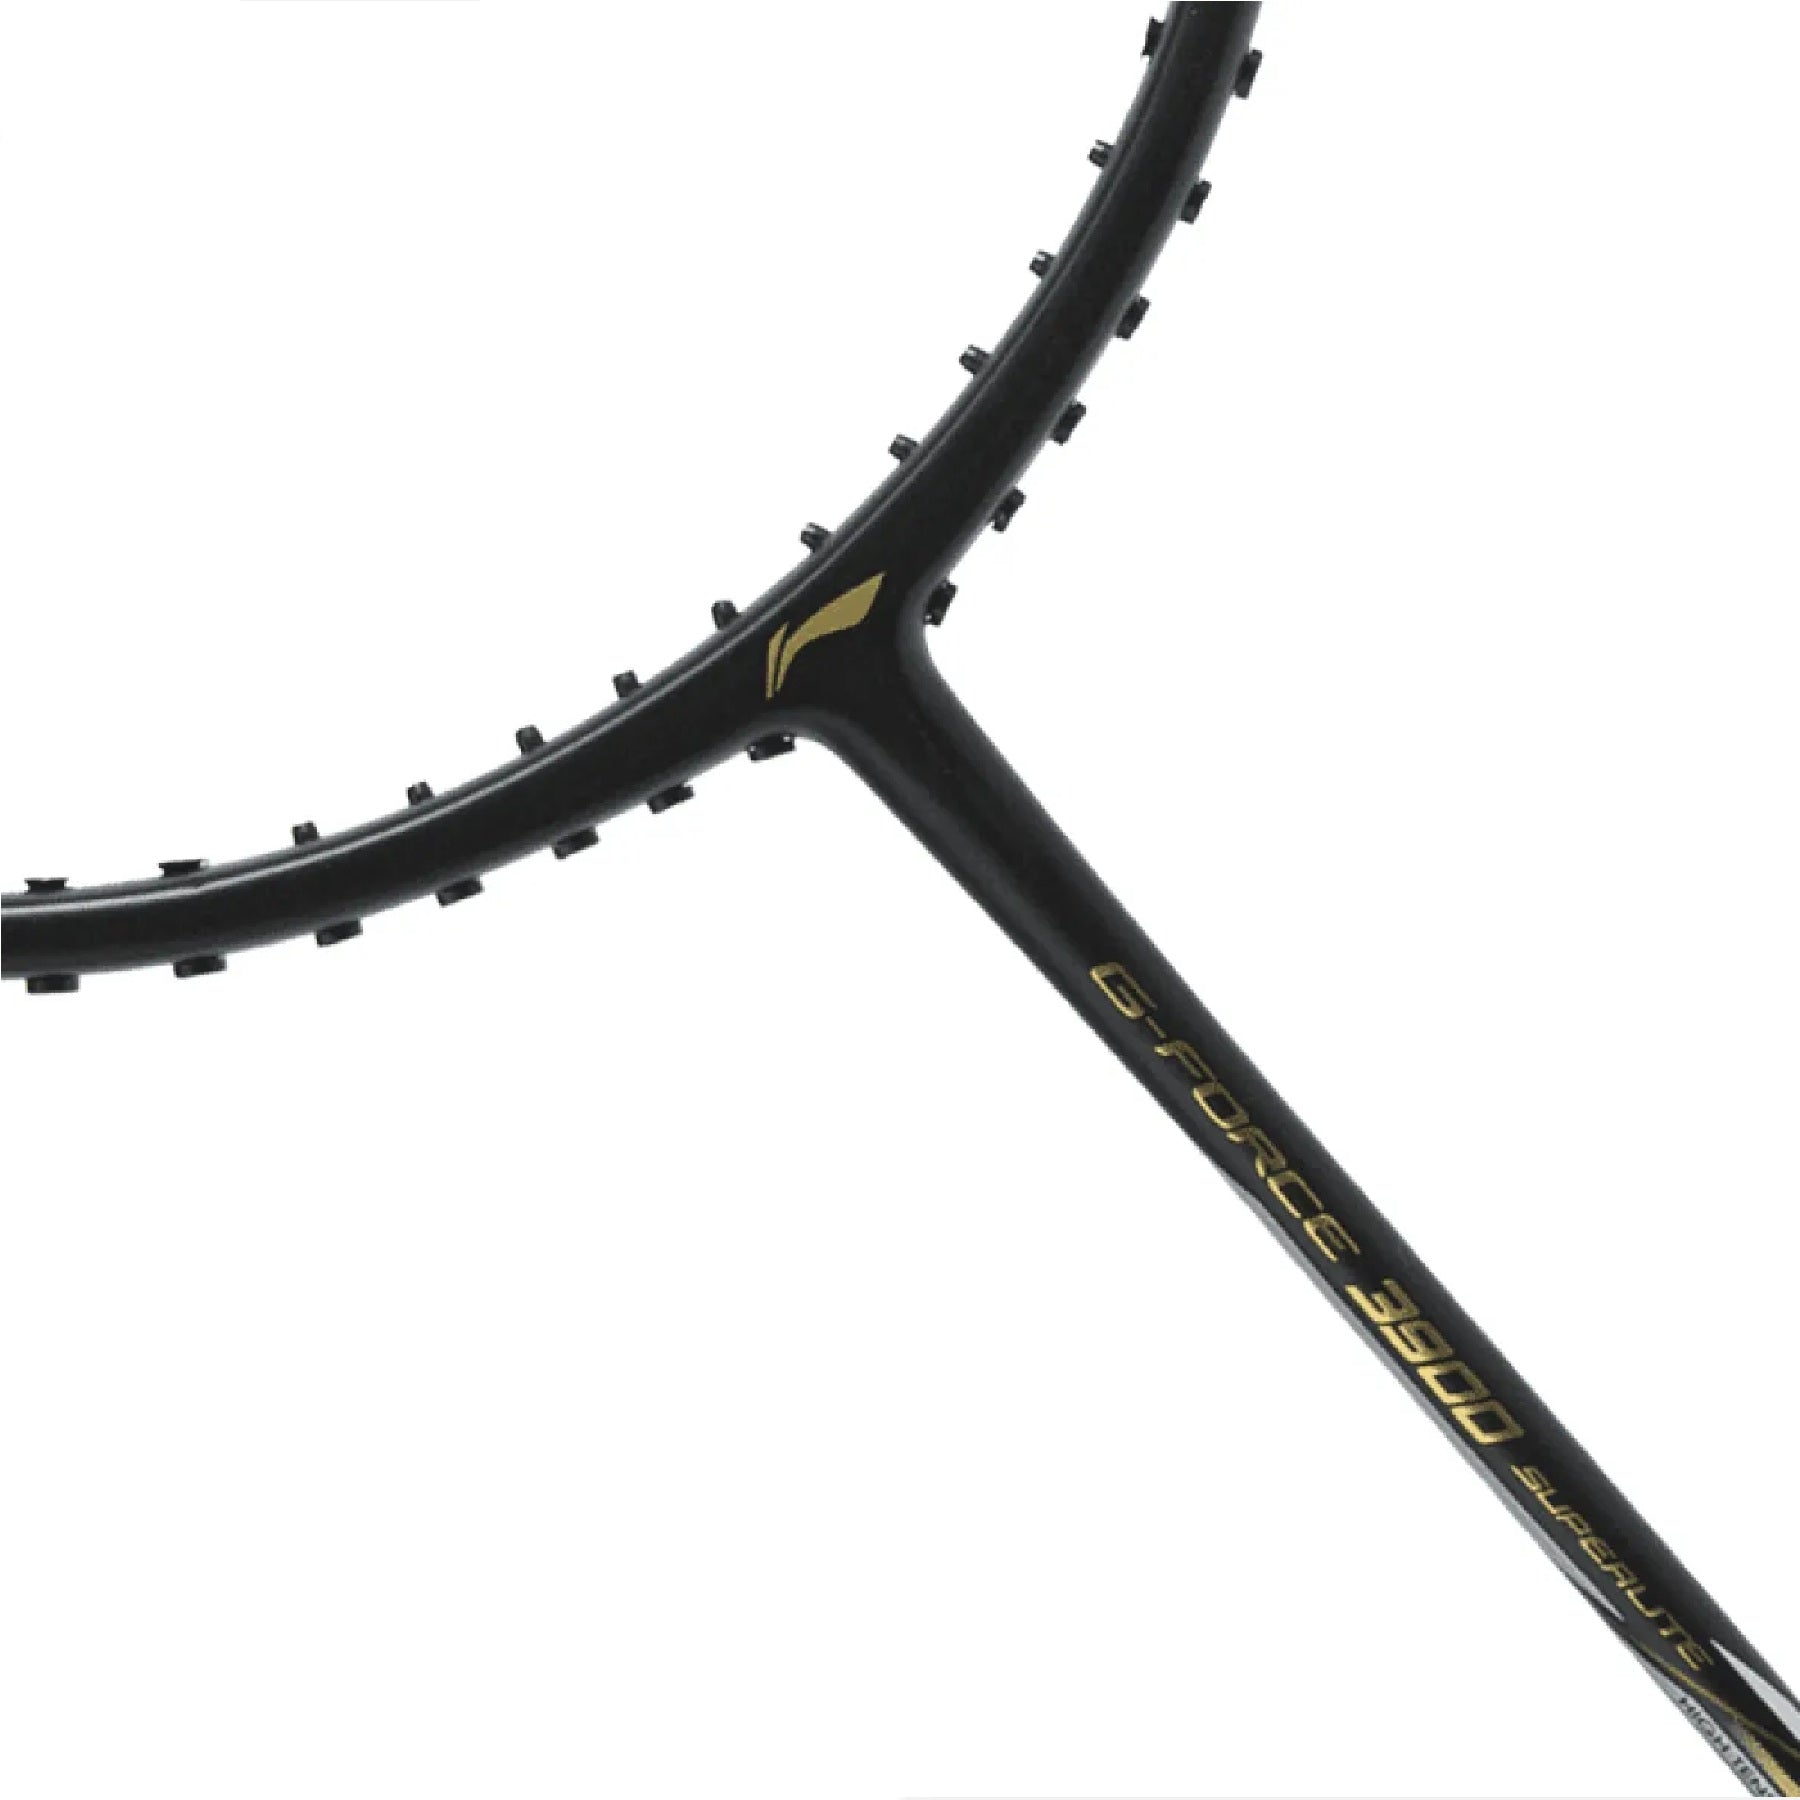 Li-Ning G-Force 3900 Superlite Strung Badminton Racquet (Black/Gold)